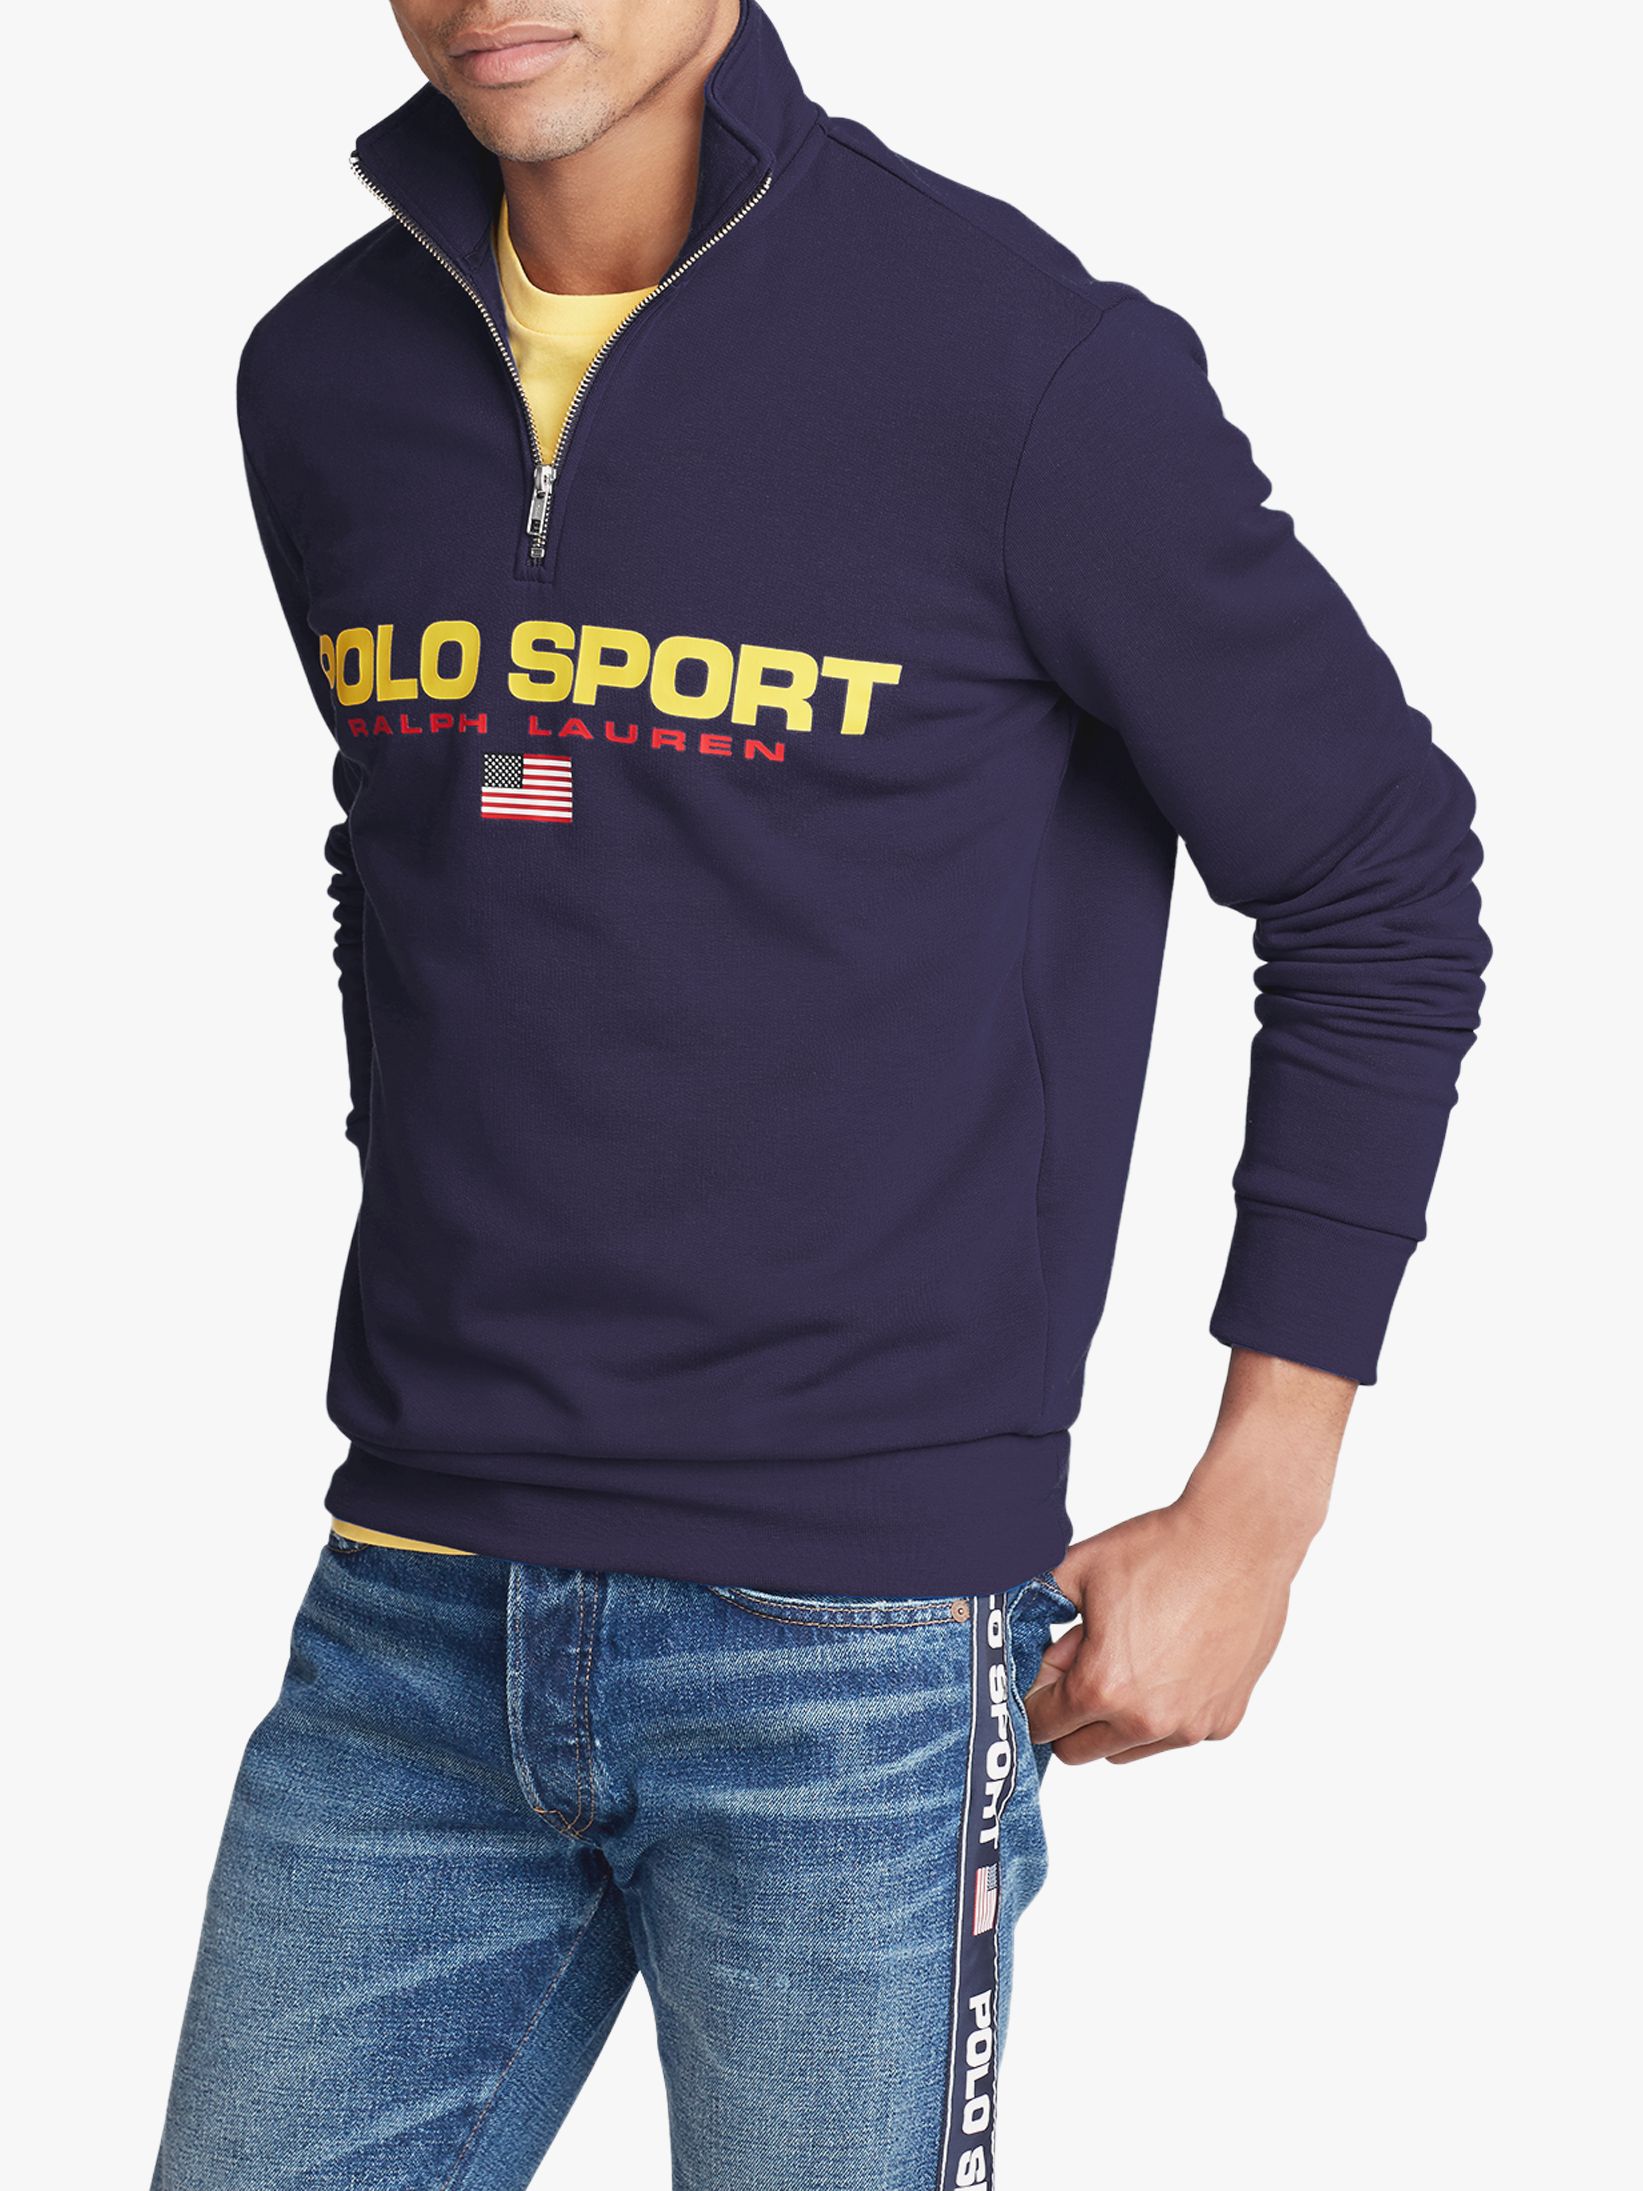 Polo Ralph Lauren Polo Sport Fleece Jo